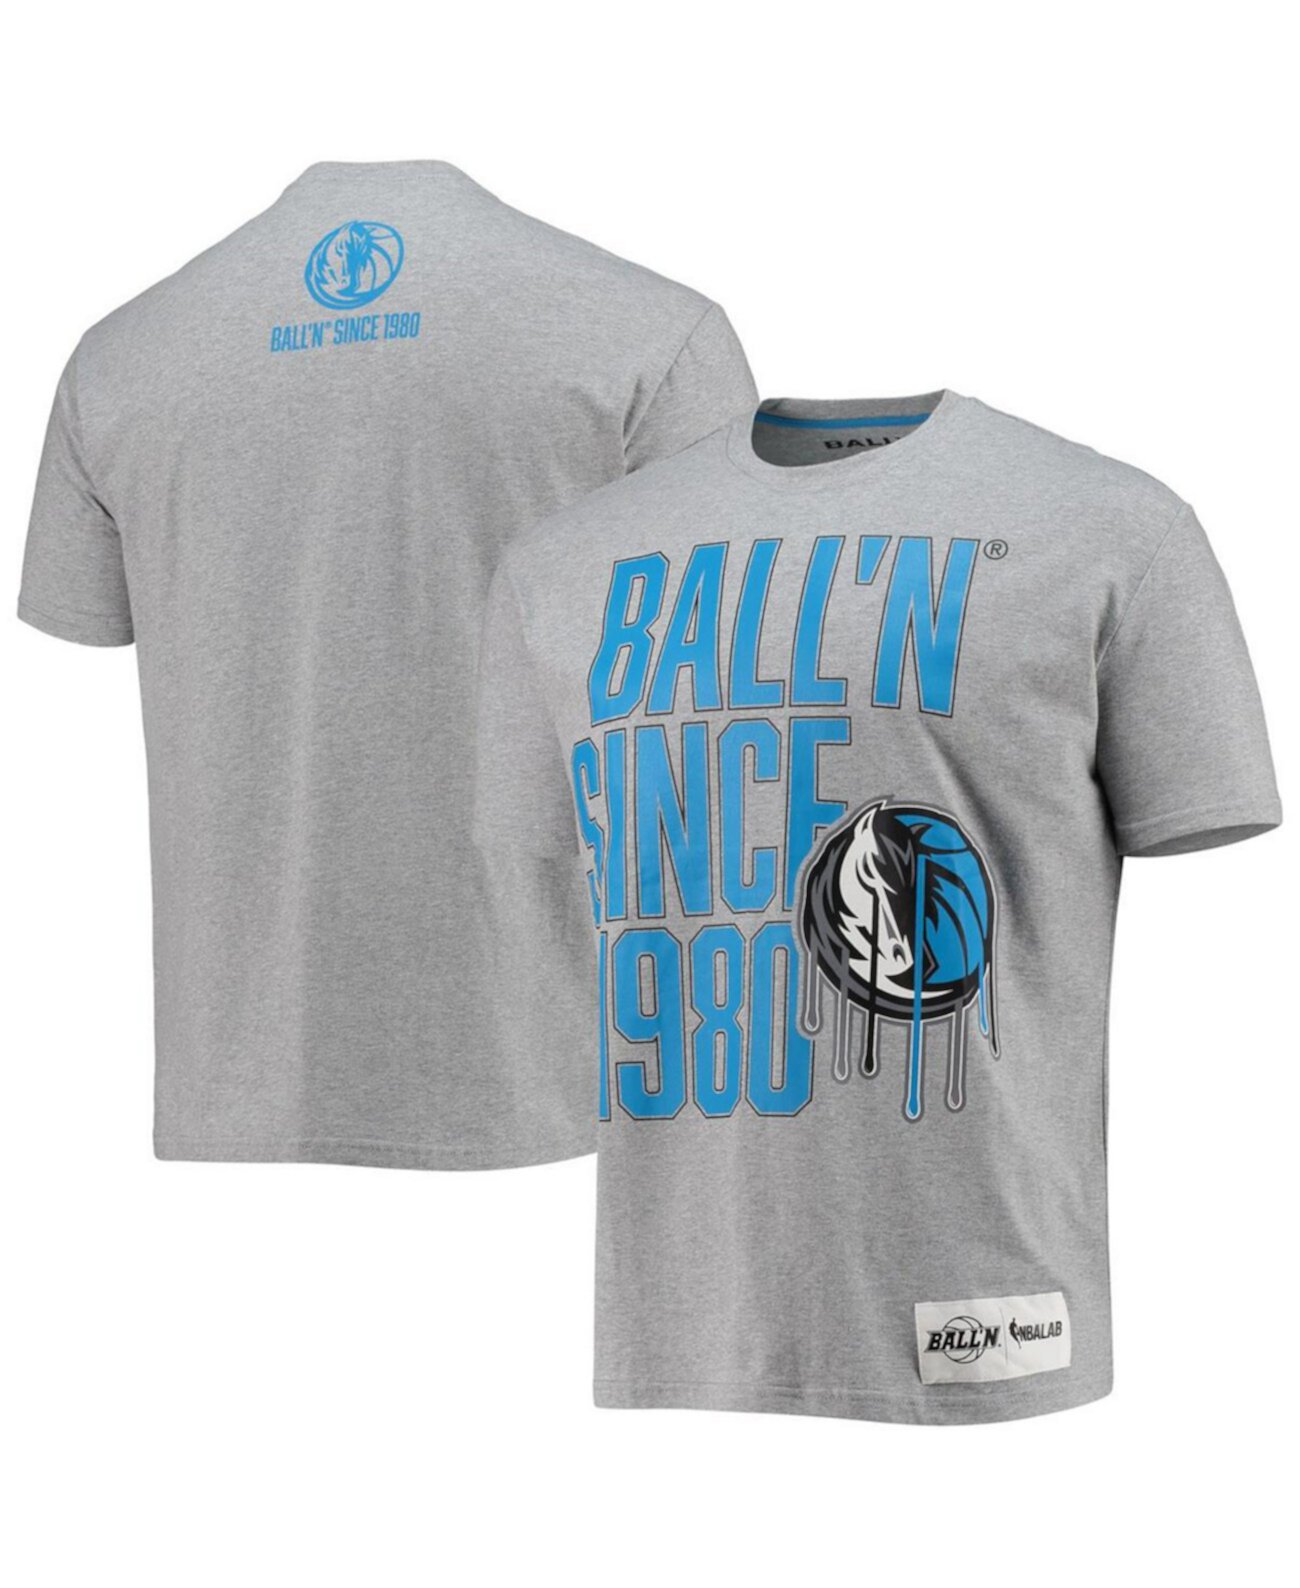 Мужская футболка Dallas Mavericks с меланжевым серым принтом с 1980 года выпуска BALL'N